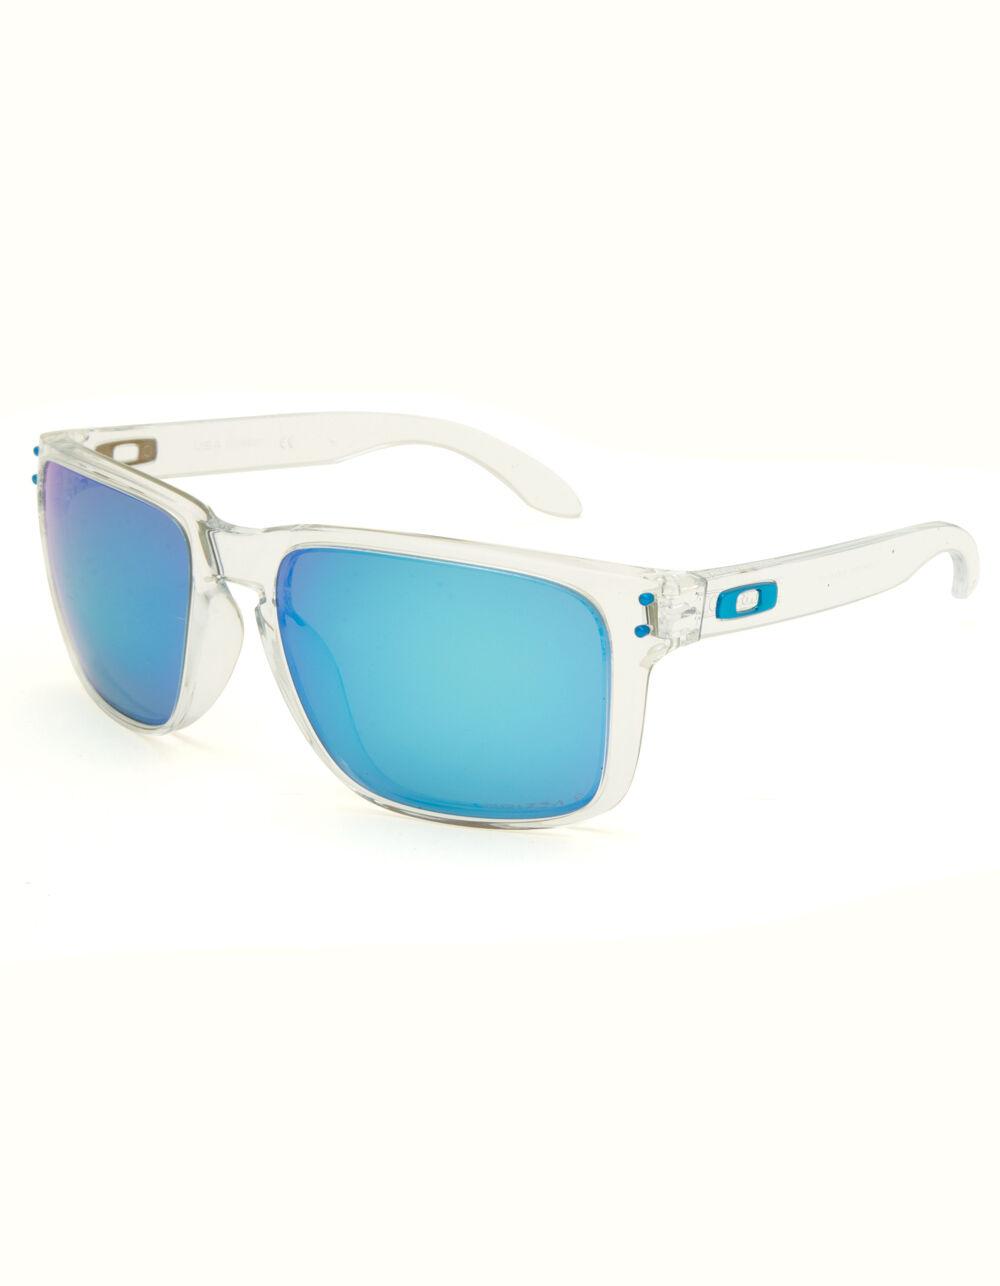 Oakley Holbrook Xl Clear & Blue Sunglasses for Men - Lyst